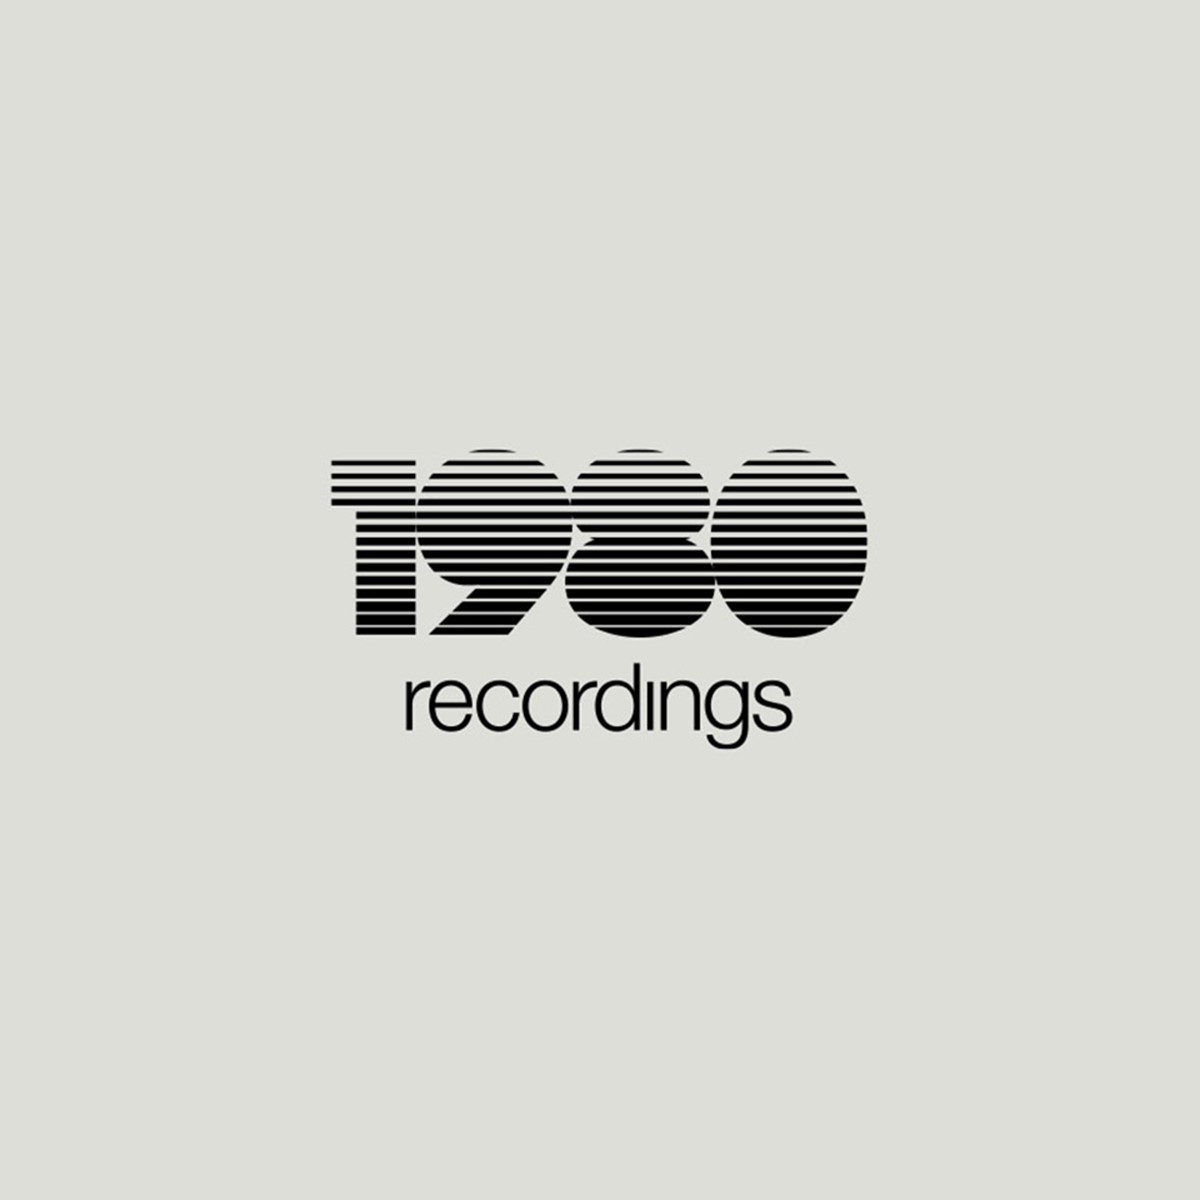 1980 Recordings. Logotype. Brand identity design by Superfried.